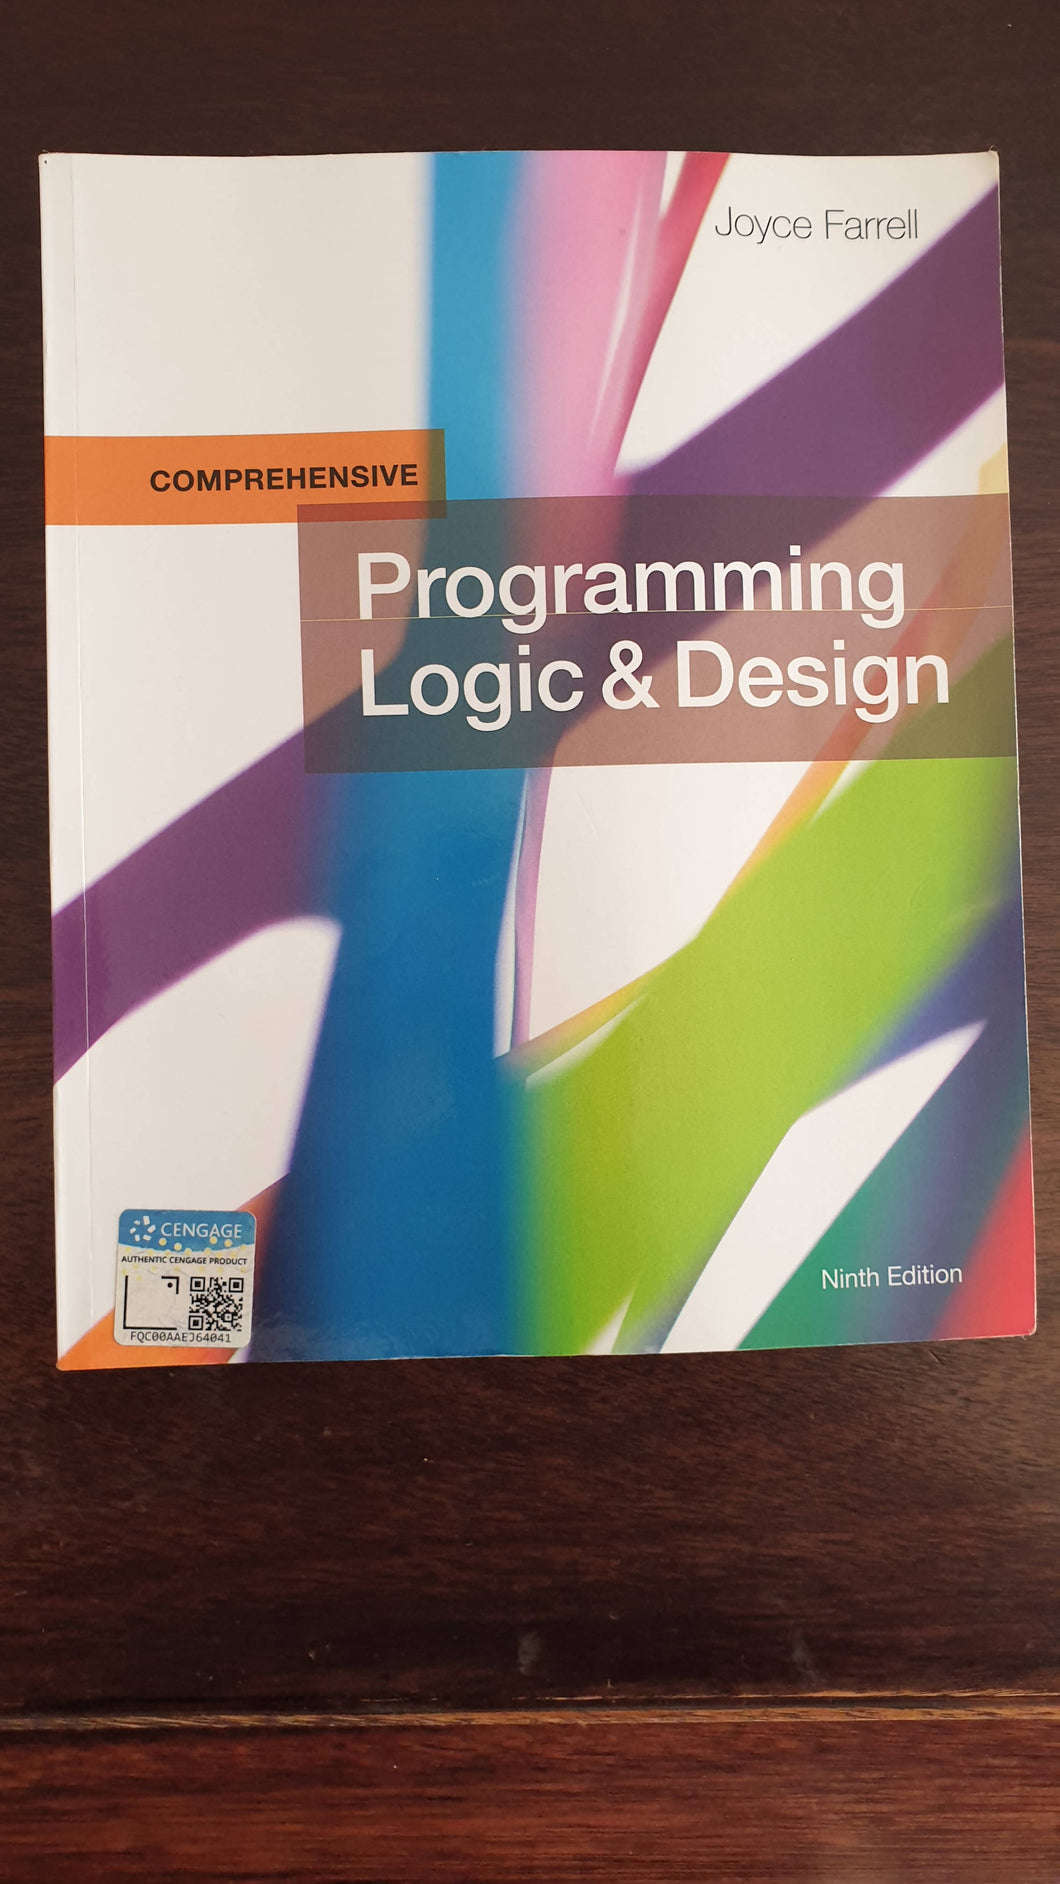 Program Logic&Design